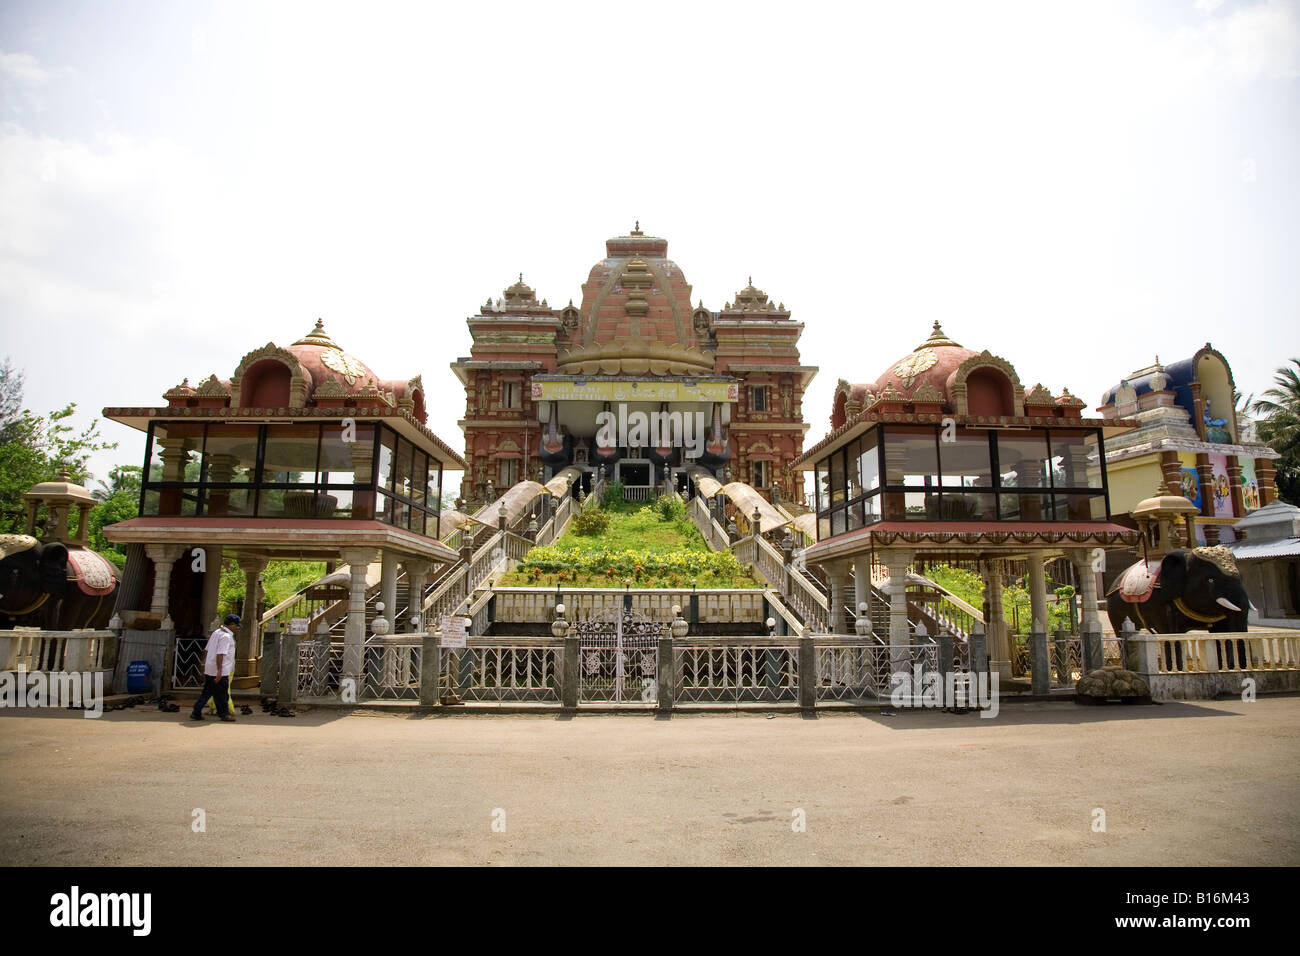 The entrance to the Sri Rama Kshethra Temple at Dharmastala, 75 km east of Mangalore. Stock Photo